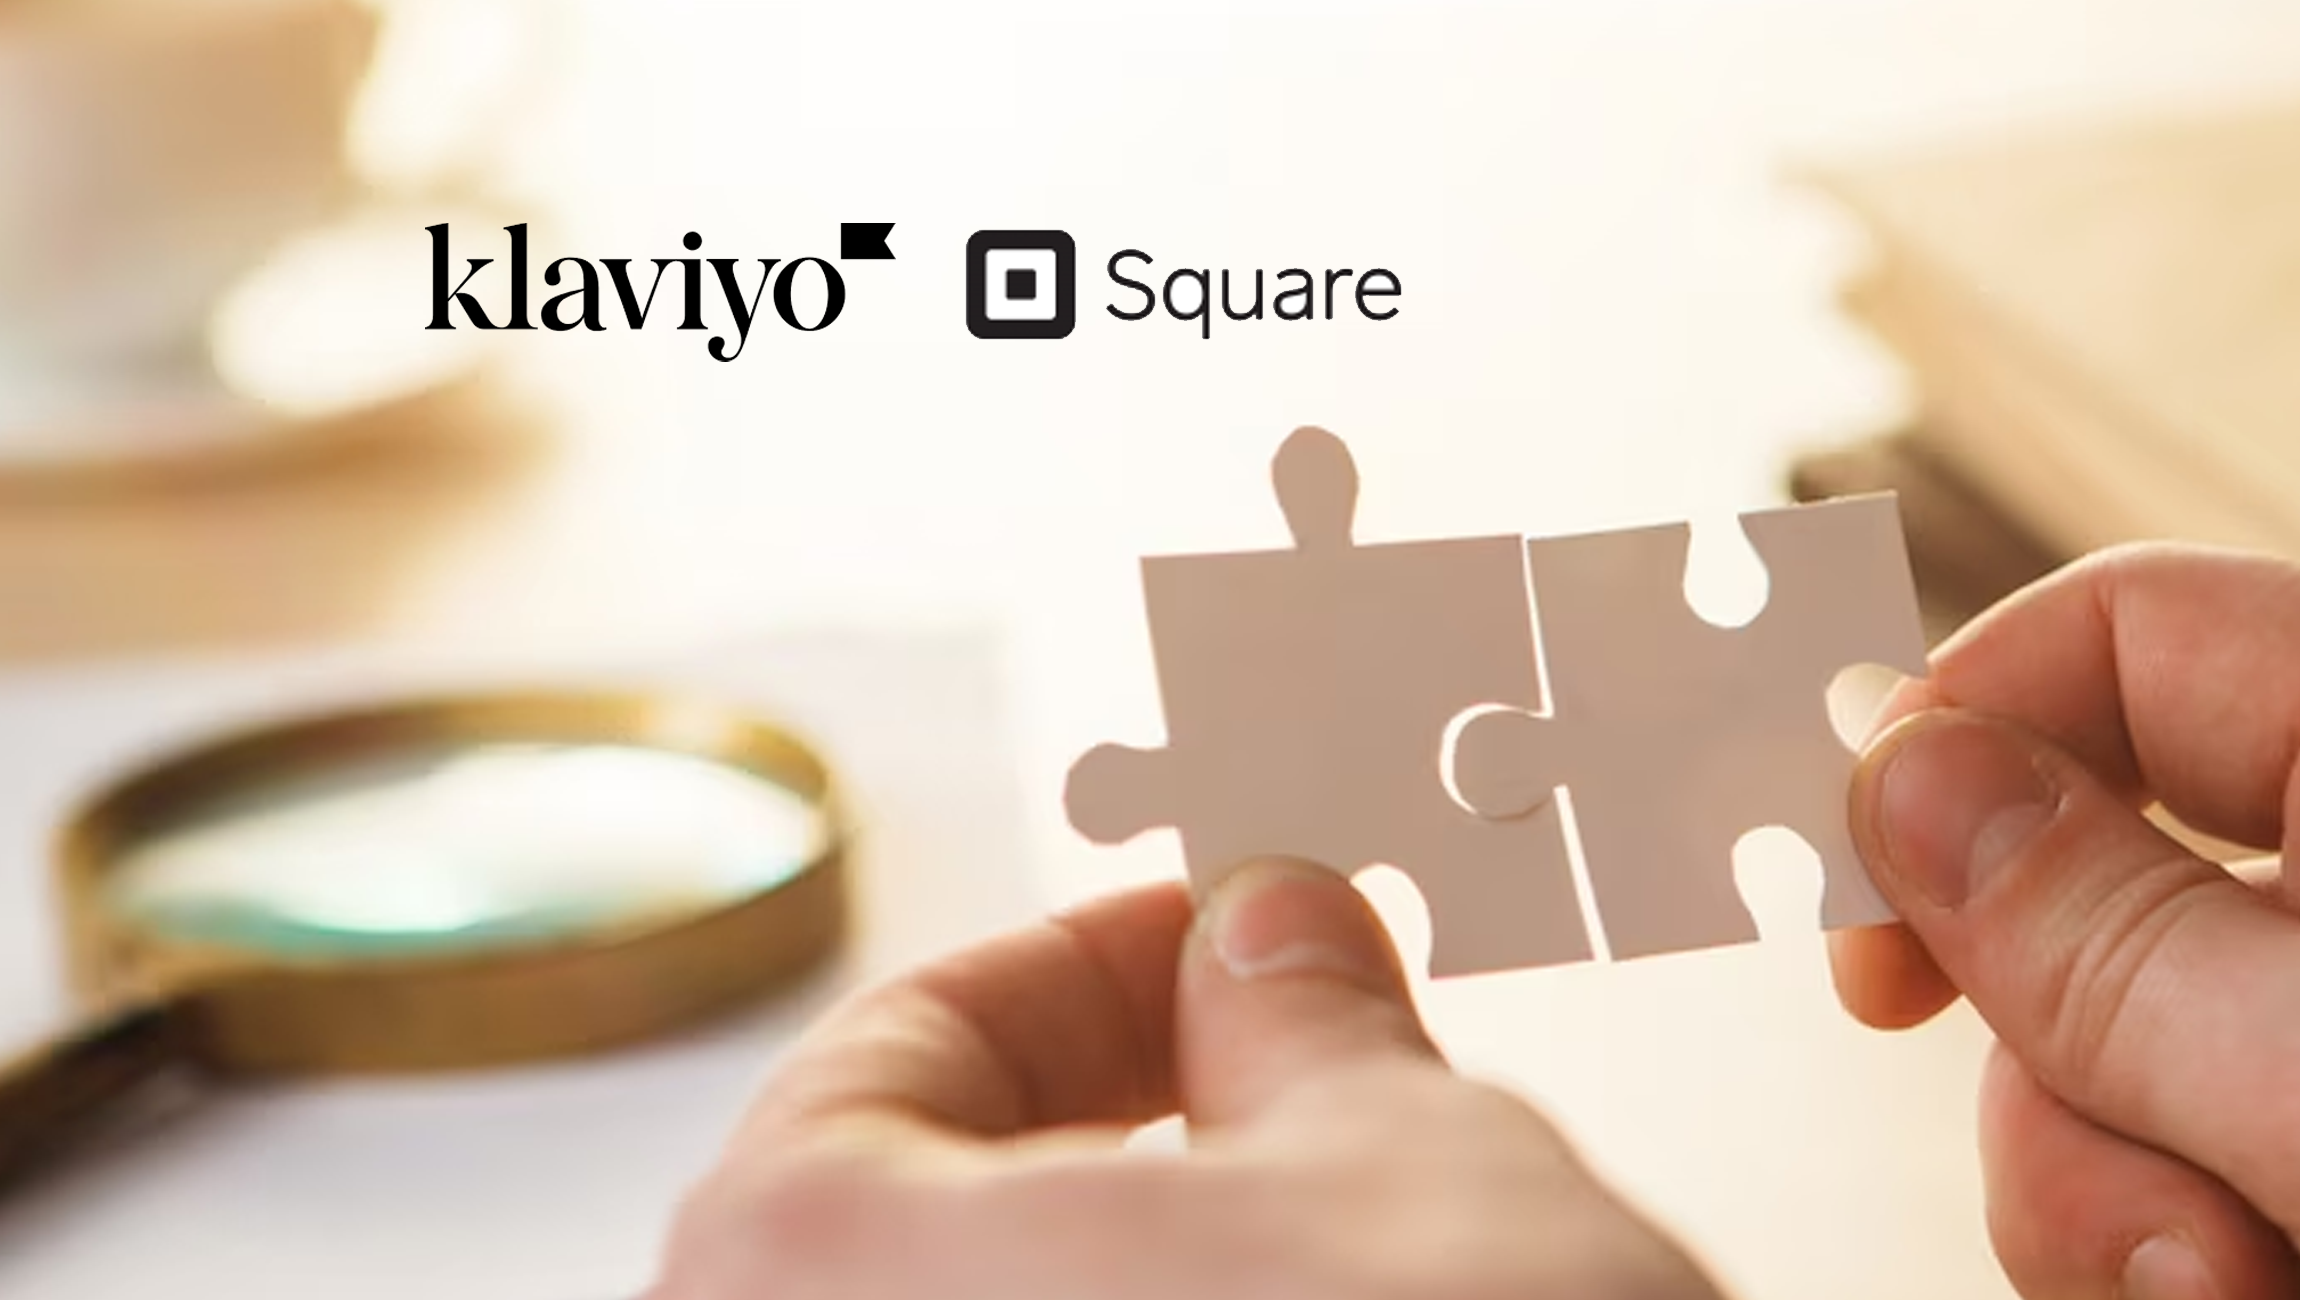 Klaviyo-Announces-Integration-with-Square-to-Help-Businesses-Drive-More-Sales